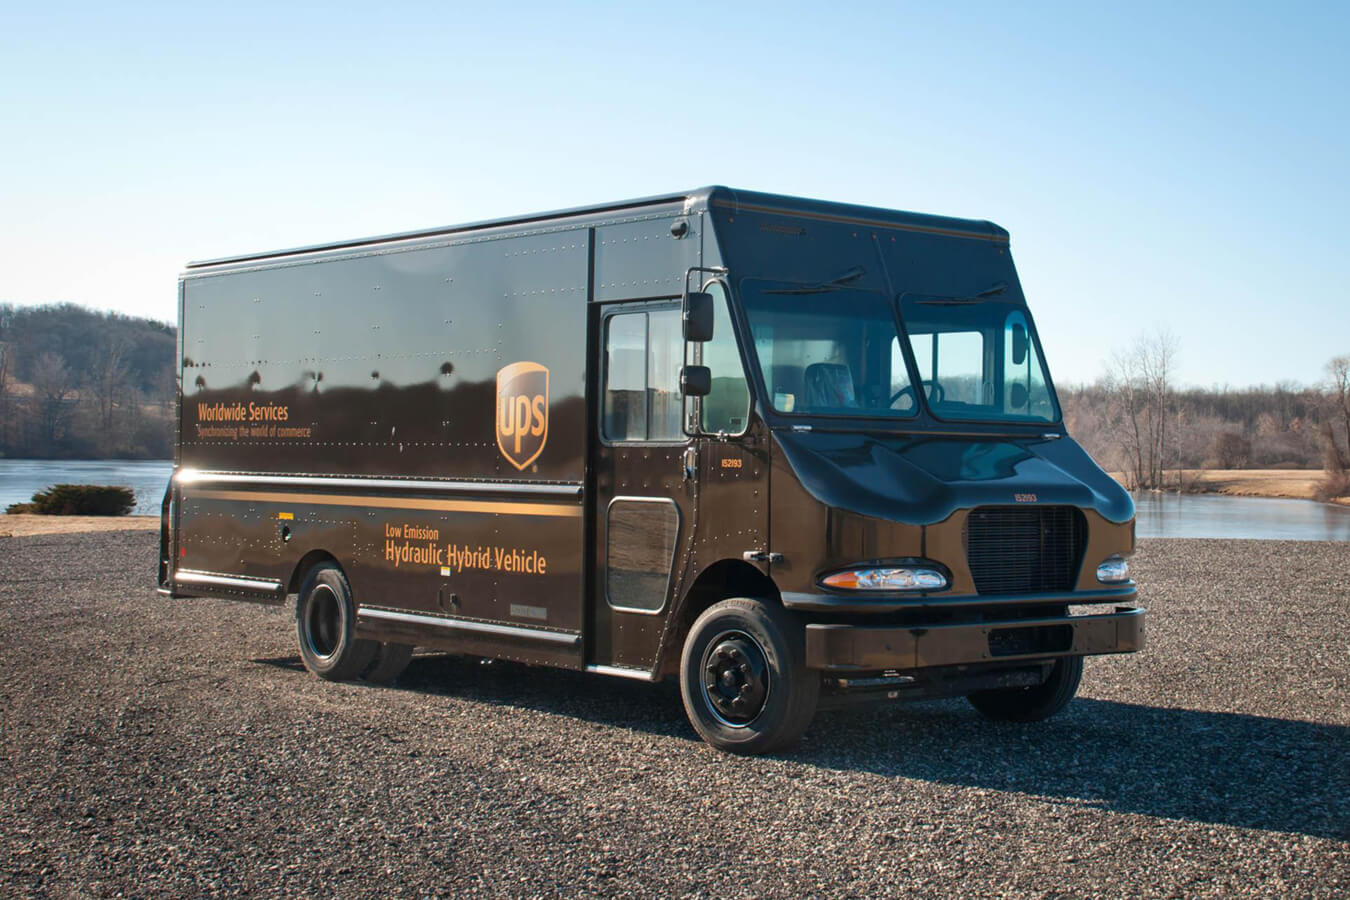 UPS to Add 40 Hydraulic Hybrid Vehicles To Its Fleet